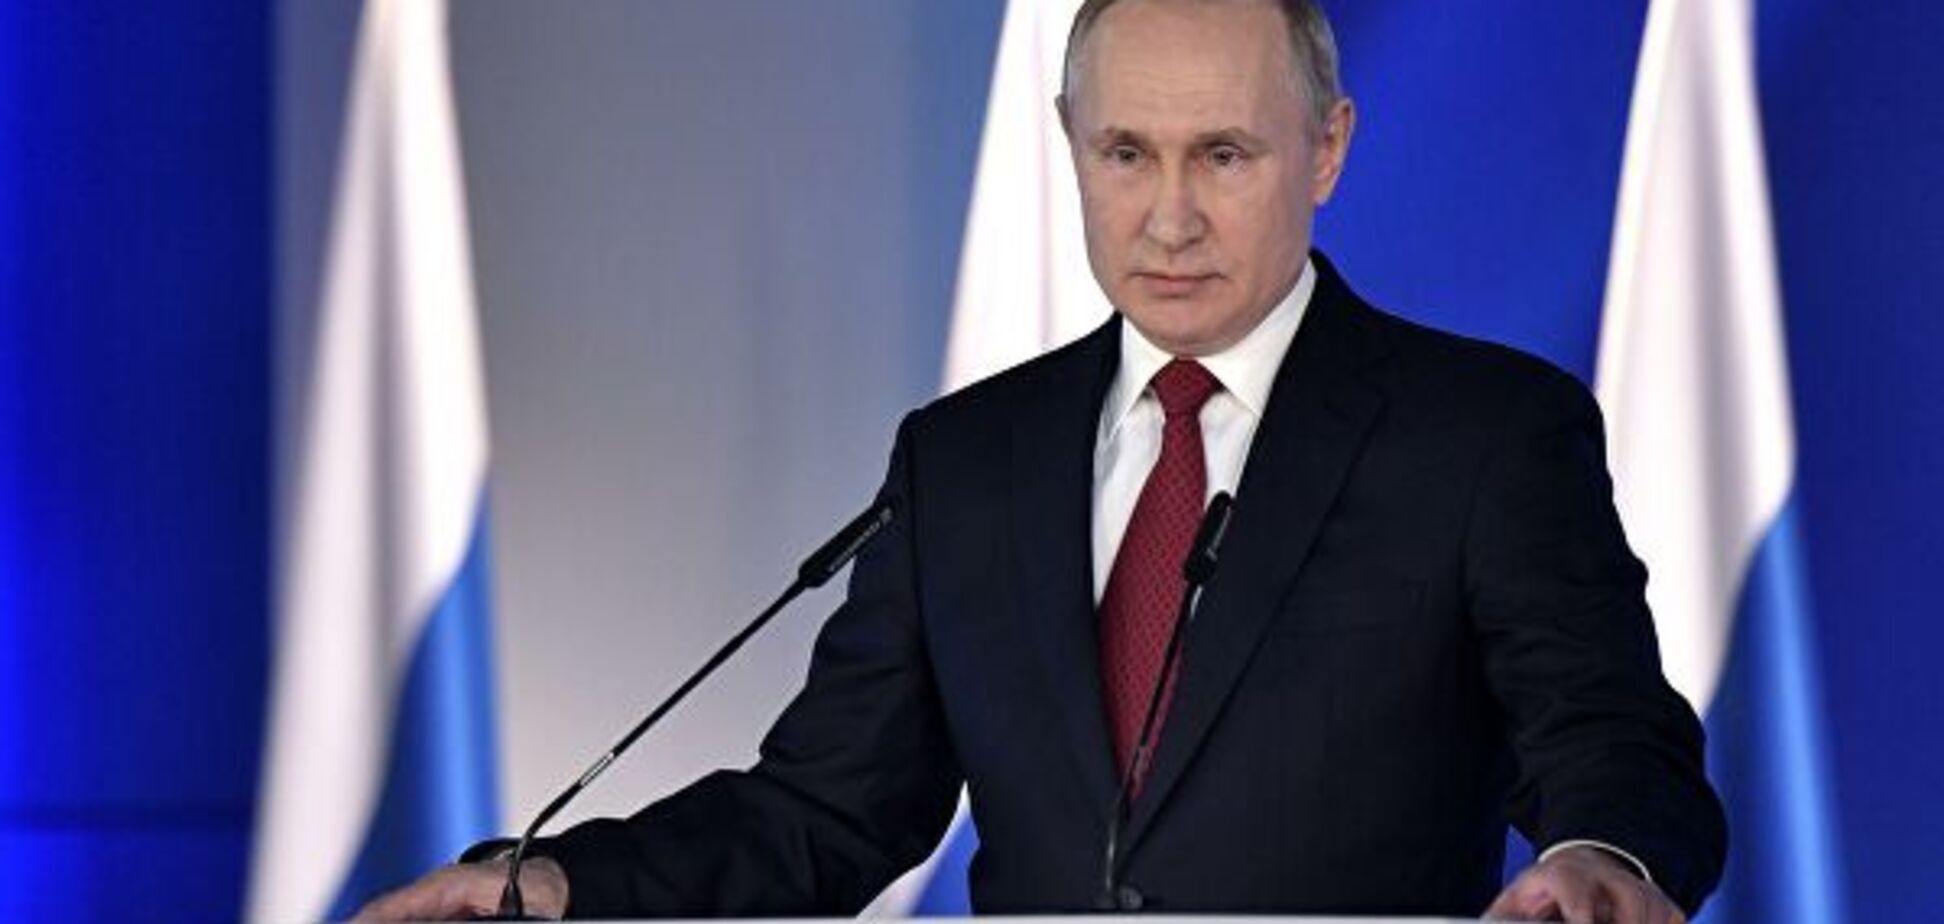 Транзита власти от Путина по непутинскому сценарию не будет